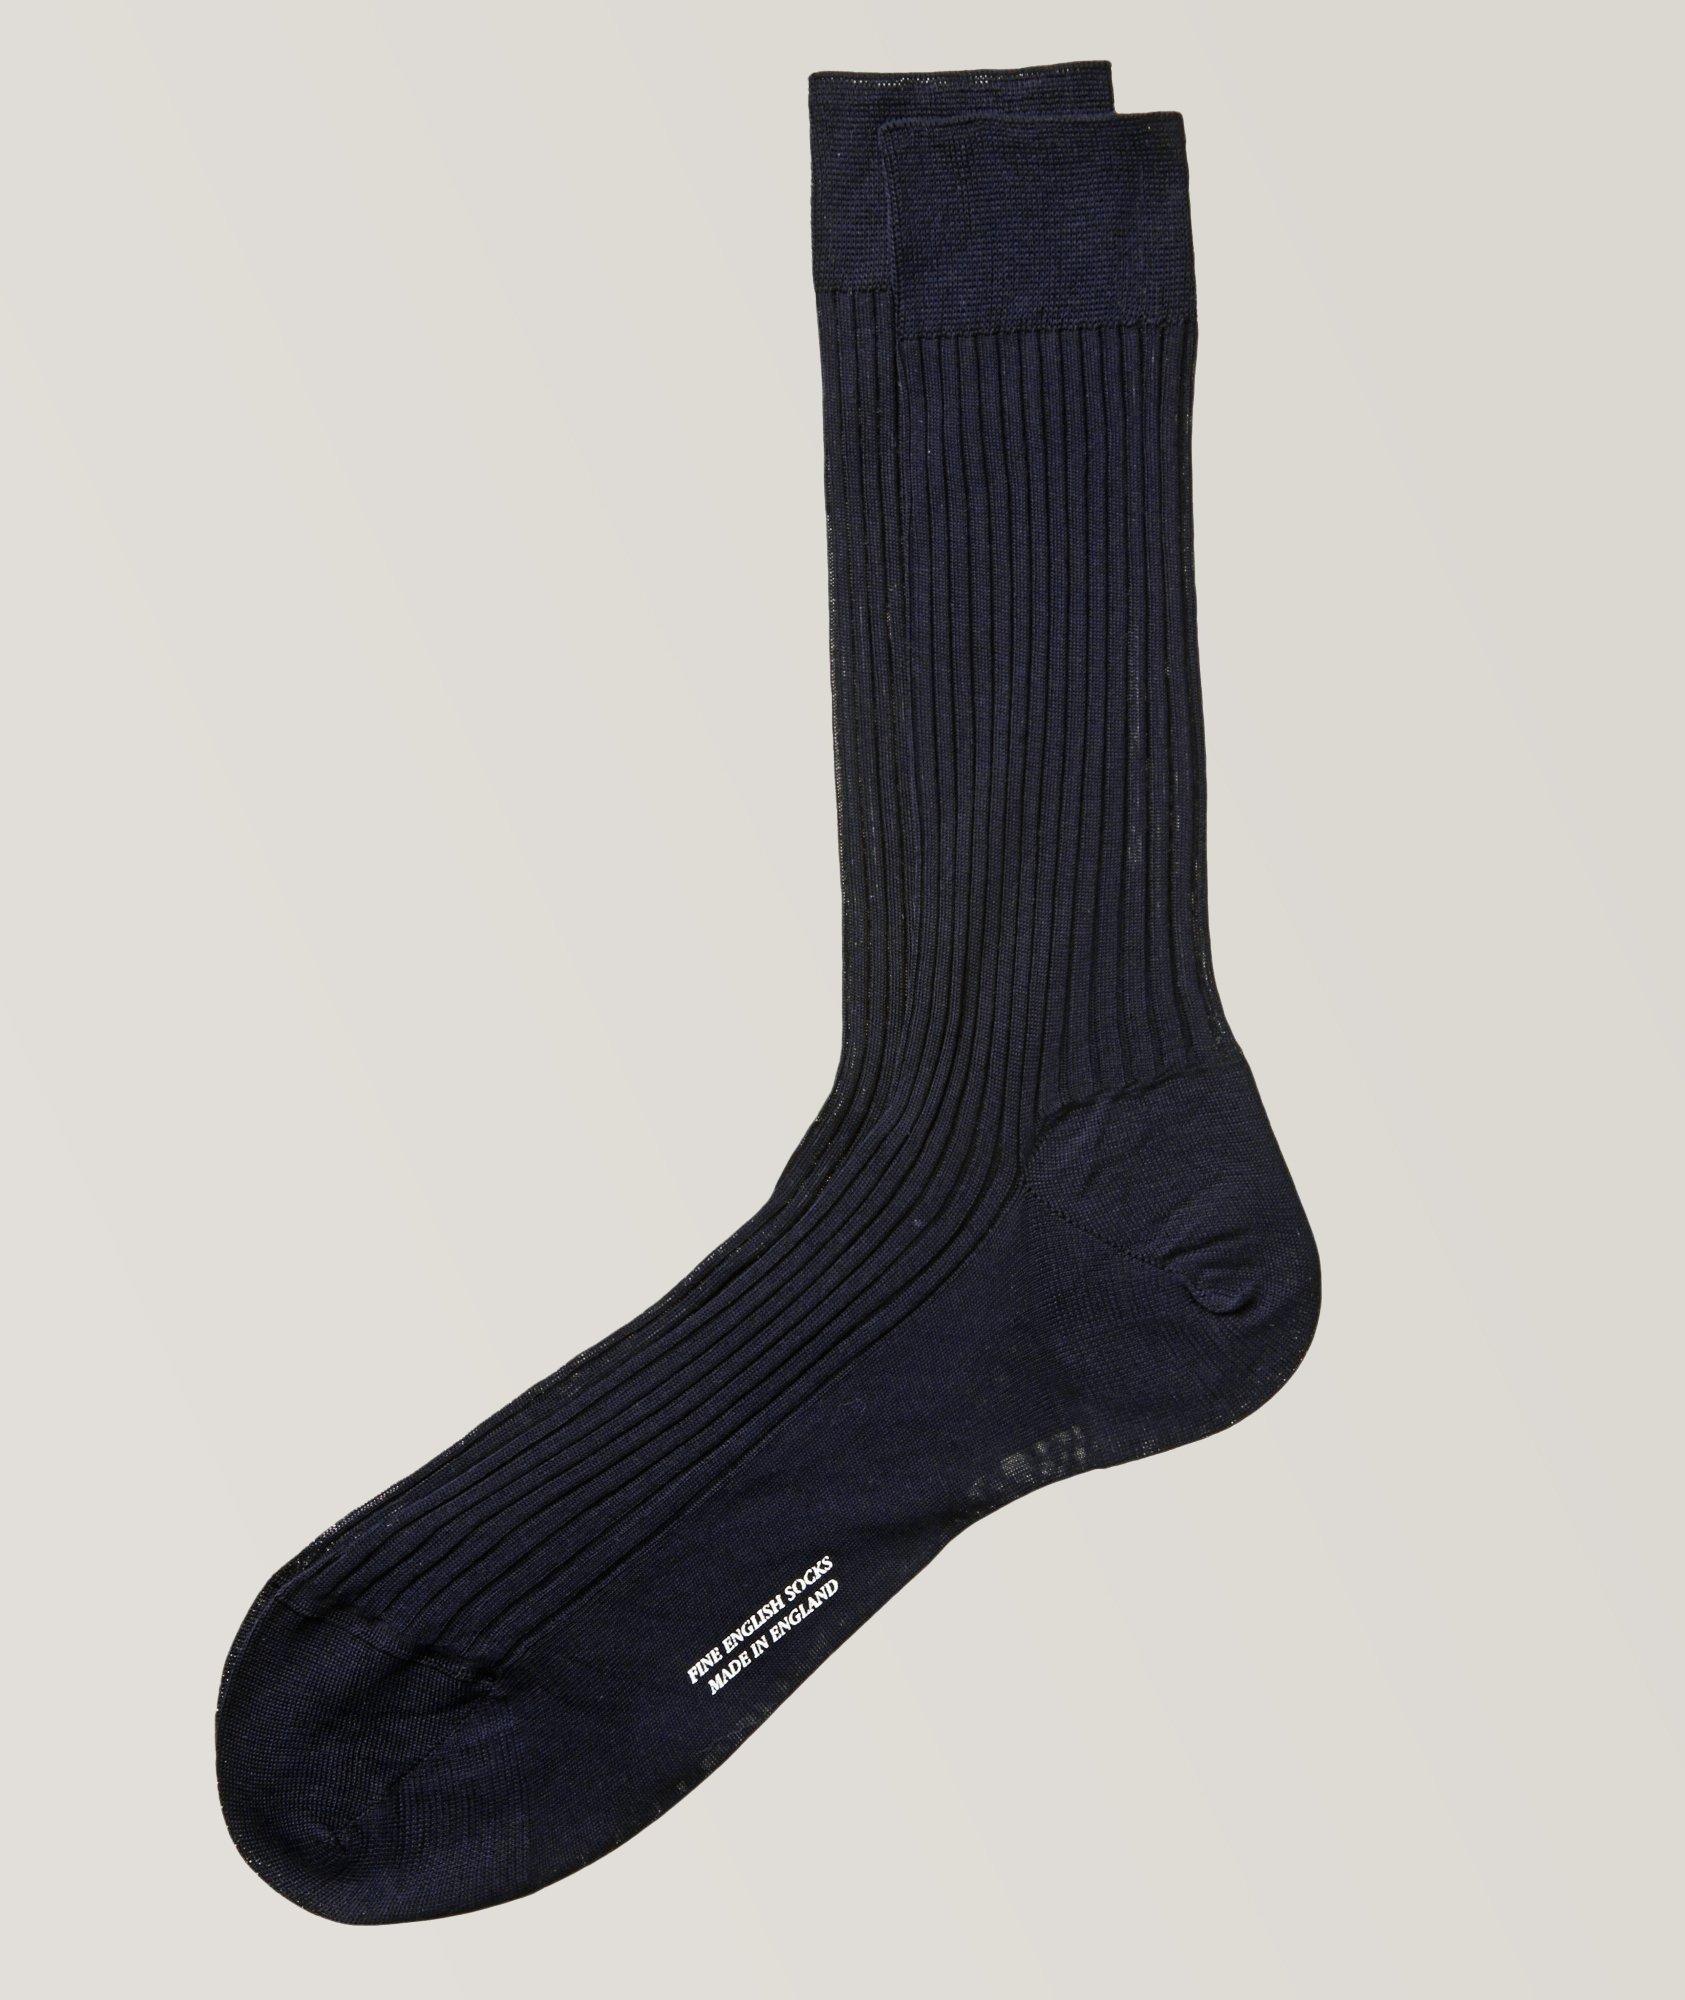 Ribbed Dress Socks image 0